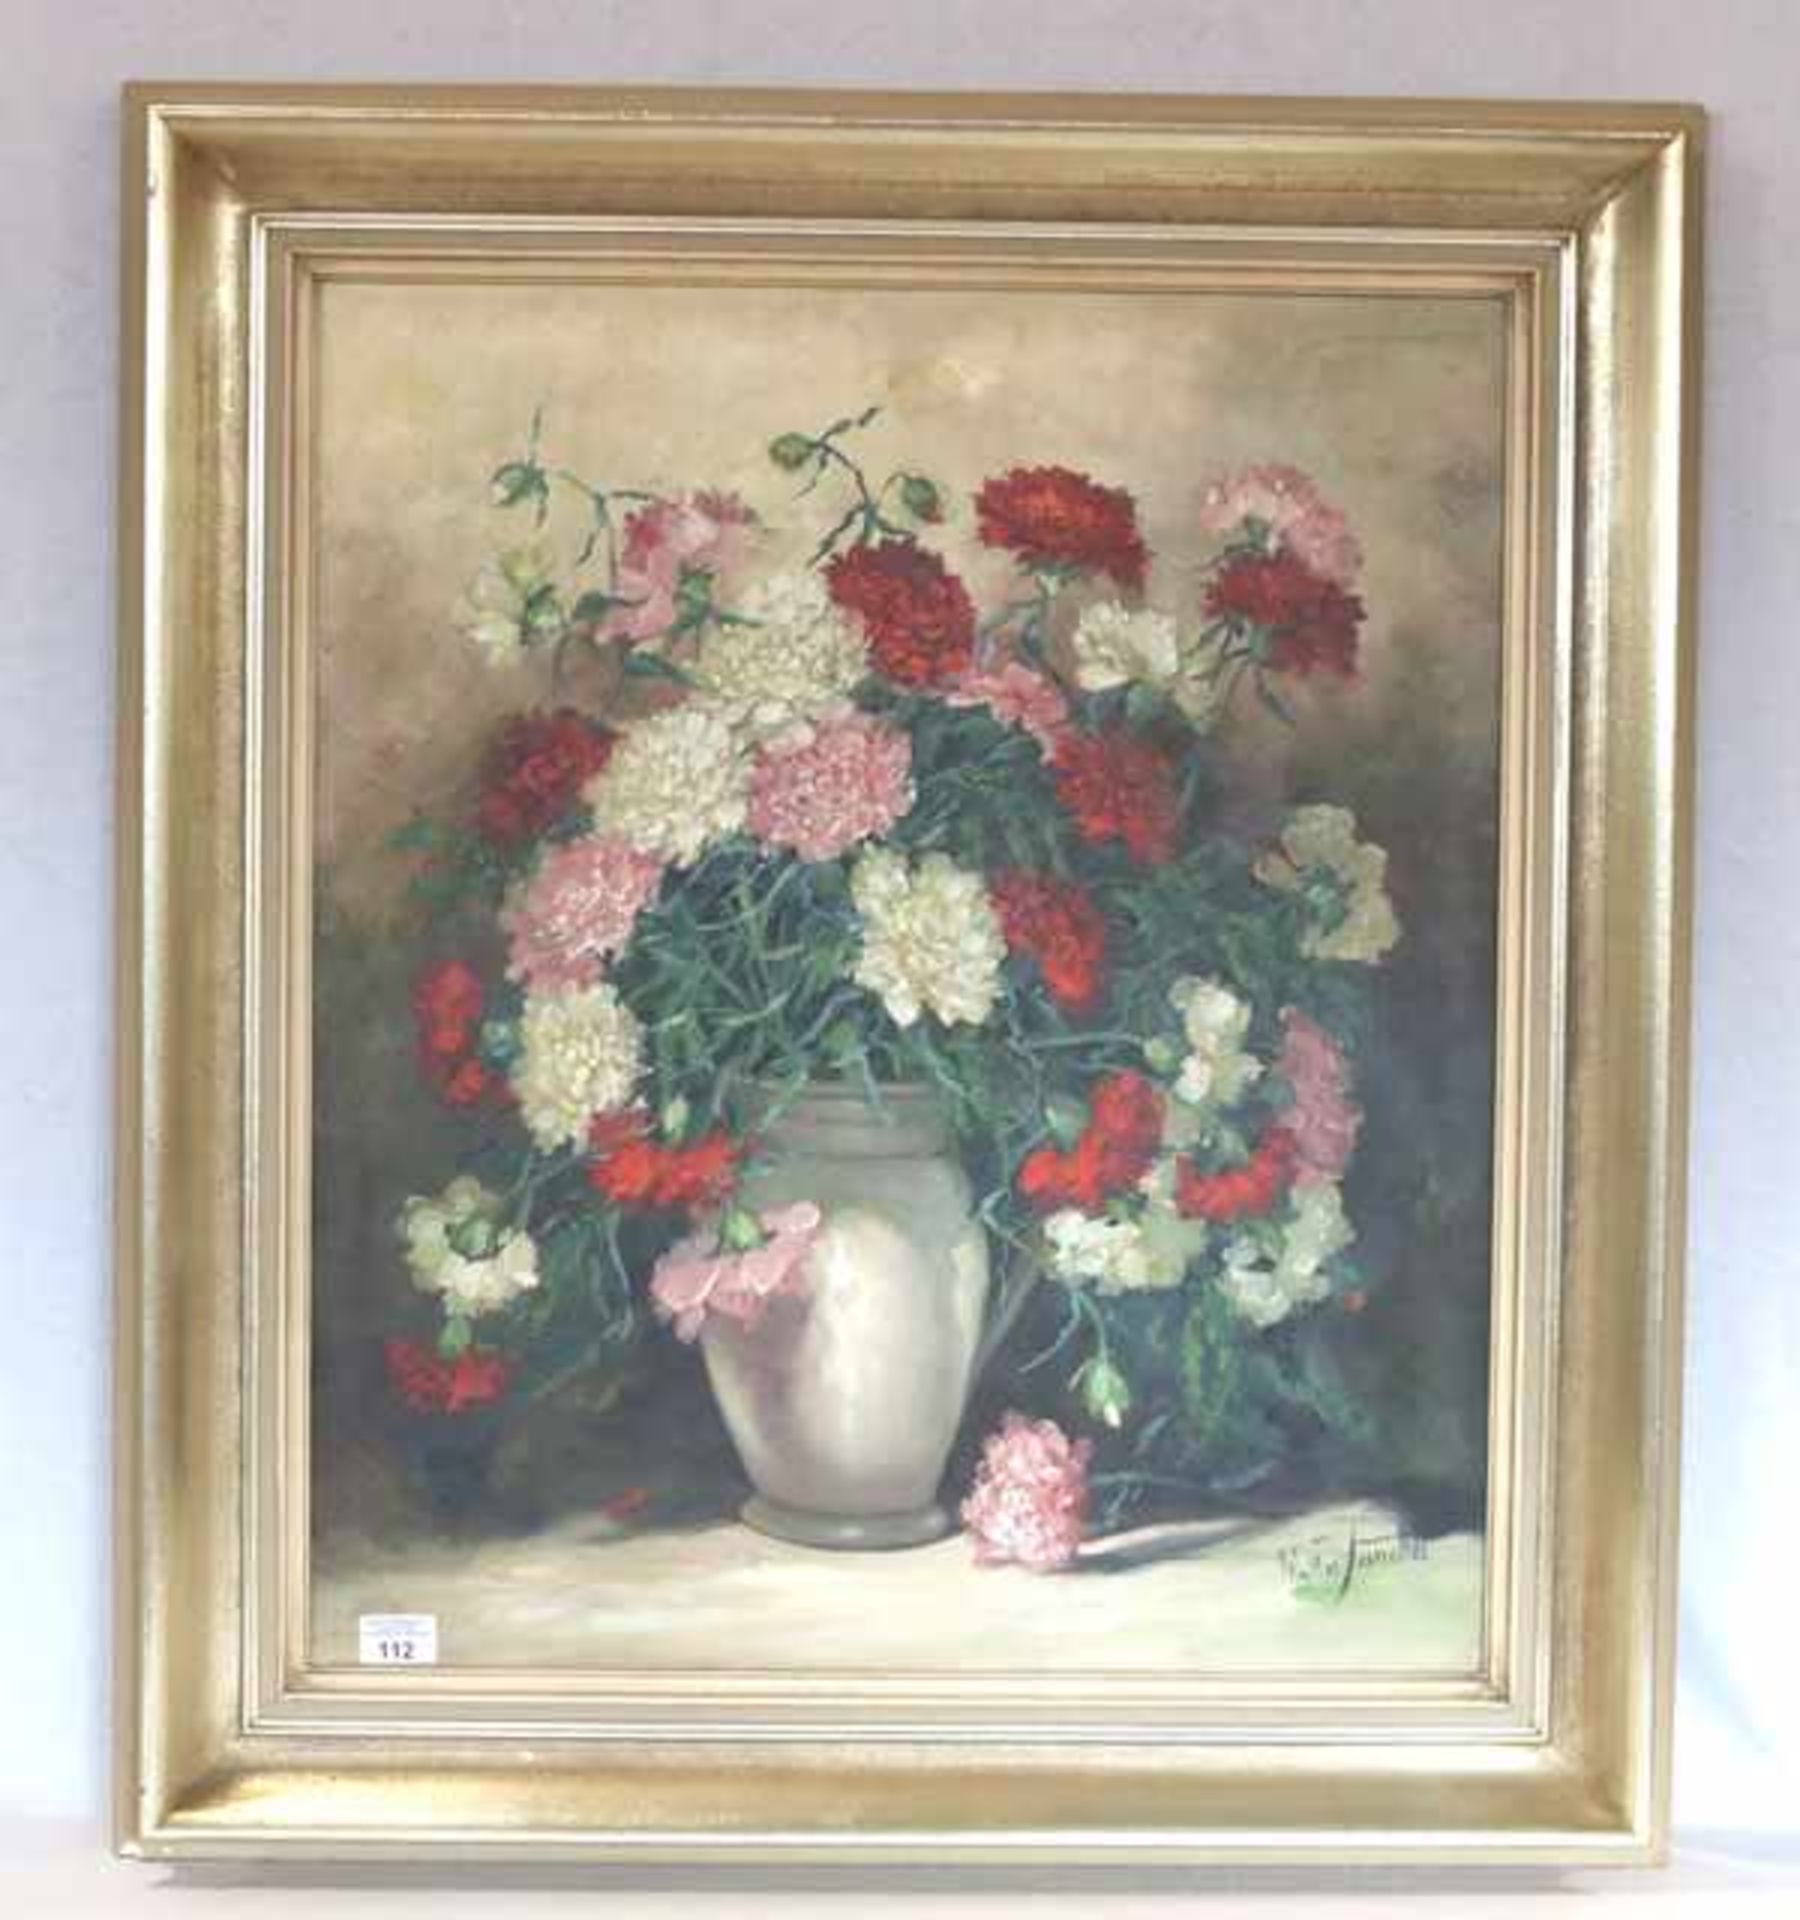 Gemälde ÖL/LW 'Blumenstillleben, Nelken in Vase', signiert Walter Janotta, * 1900 + 1990 Münchner